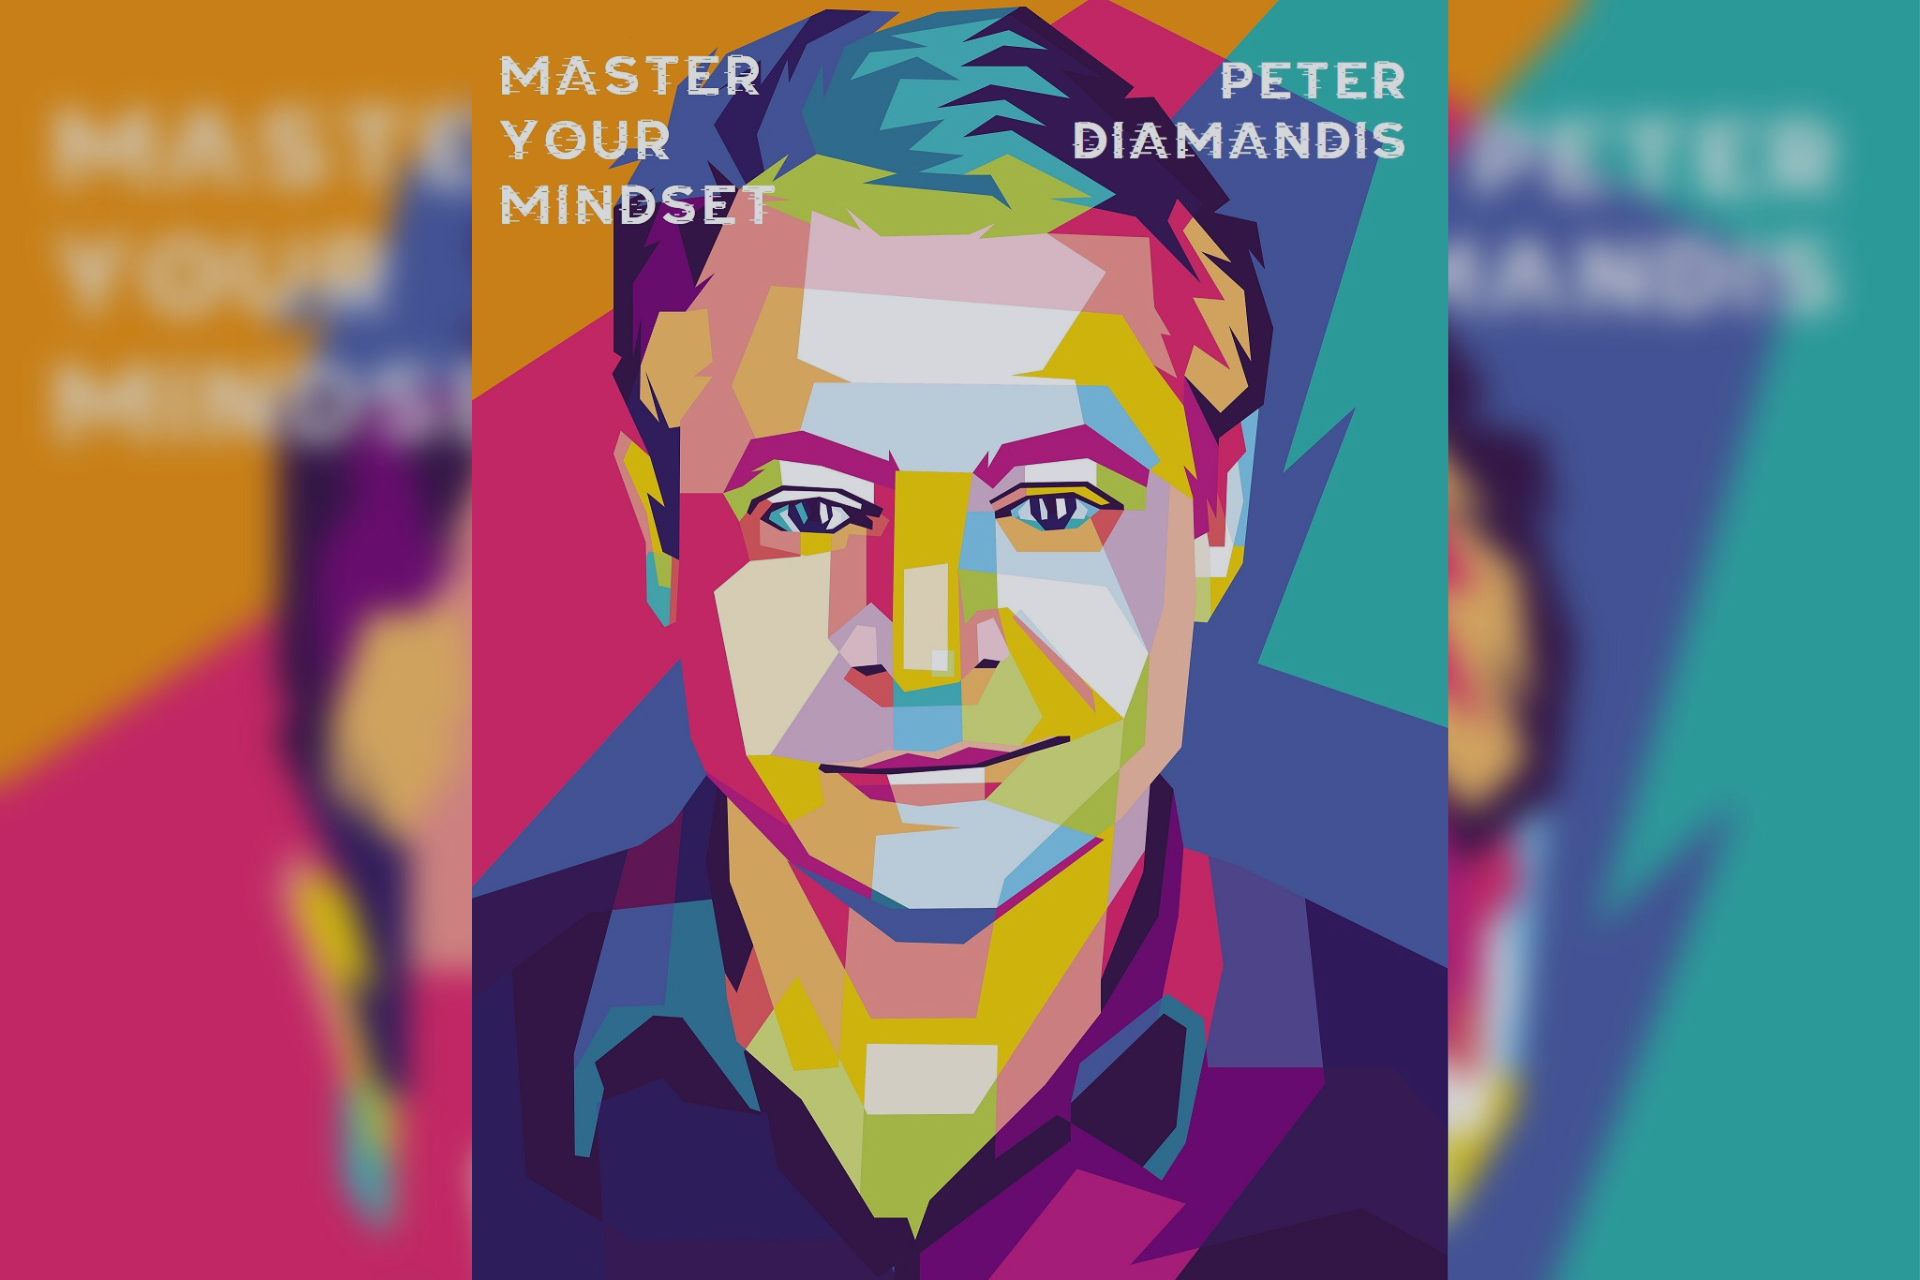 Peter Diamandis, Master Your Mindset Series by Christi McAdams